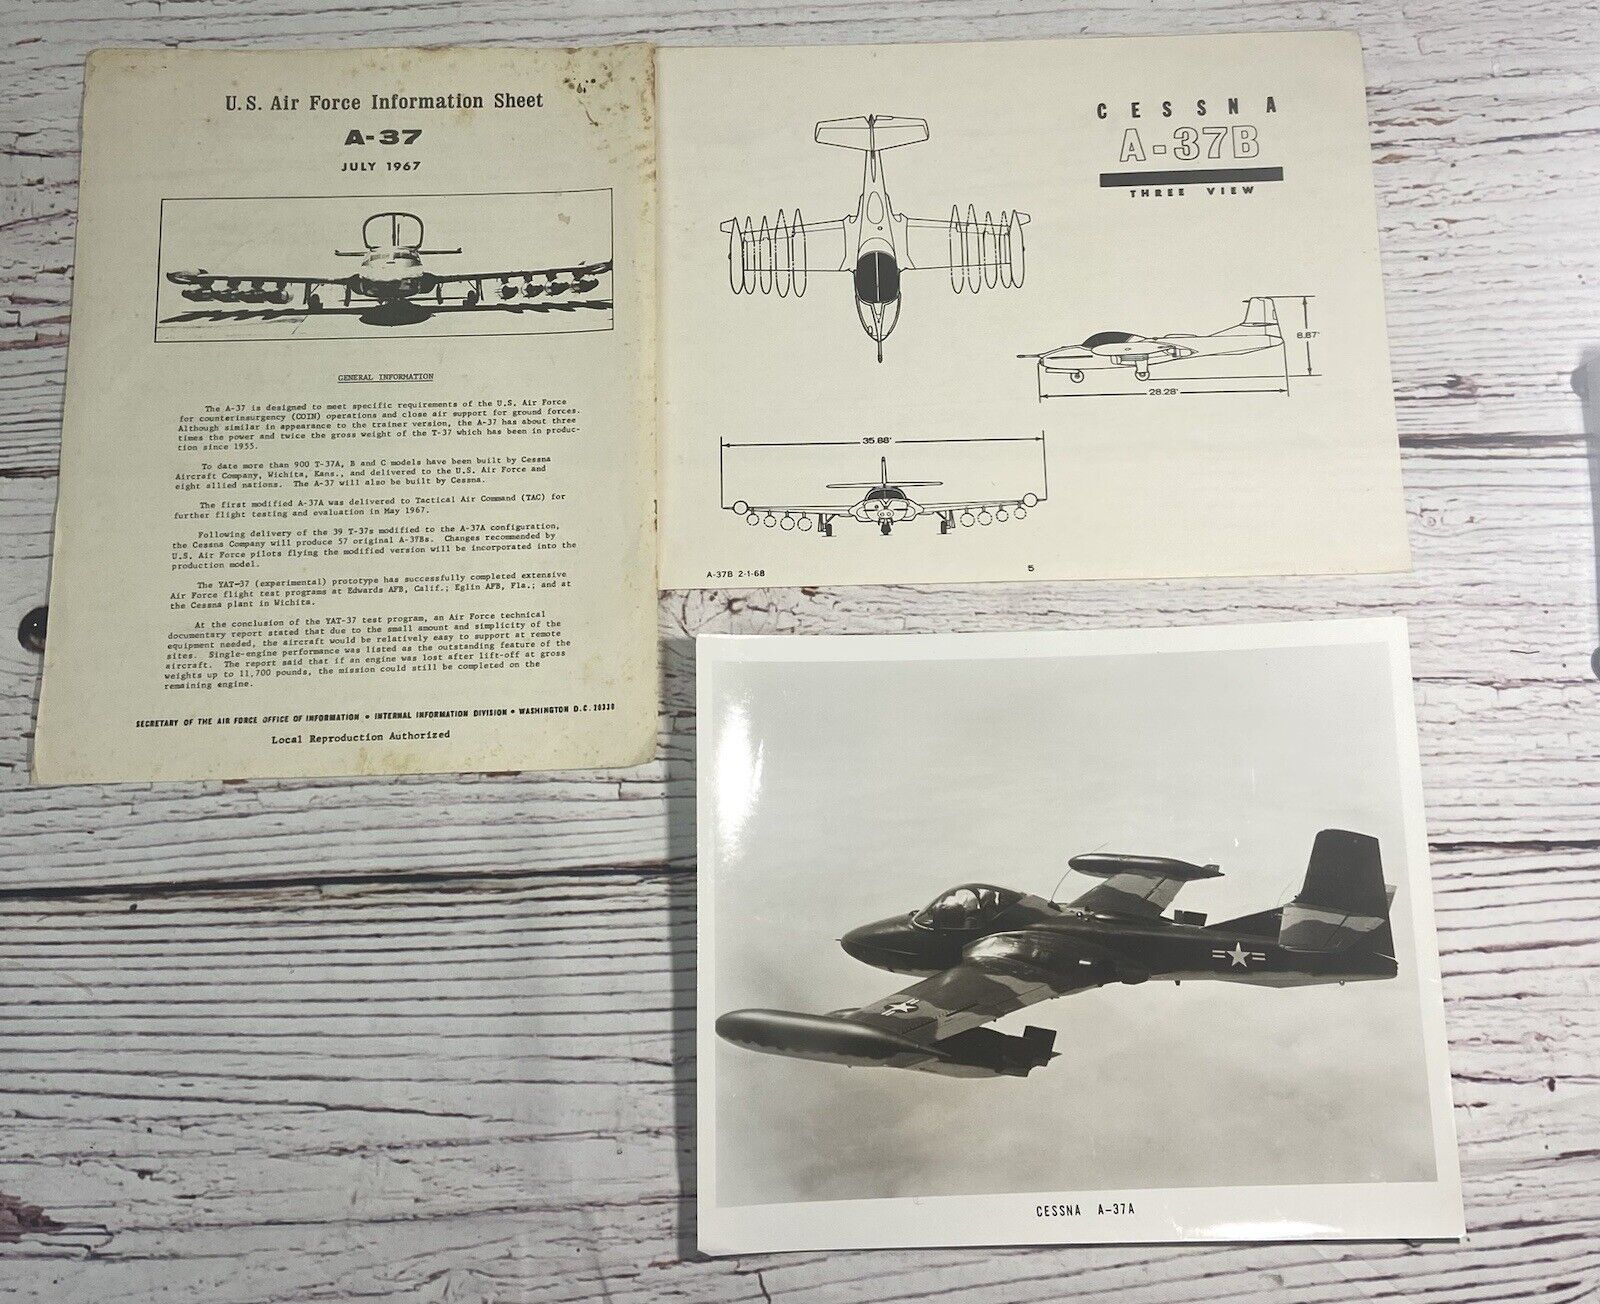 VTG 8” x 10” Photo of Cessna A-37A, 1967 USAF Information Sheets on A-37 & A-37B